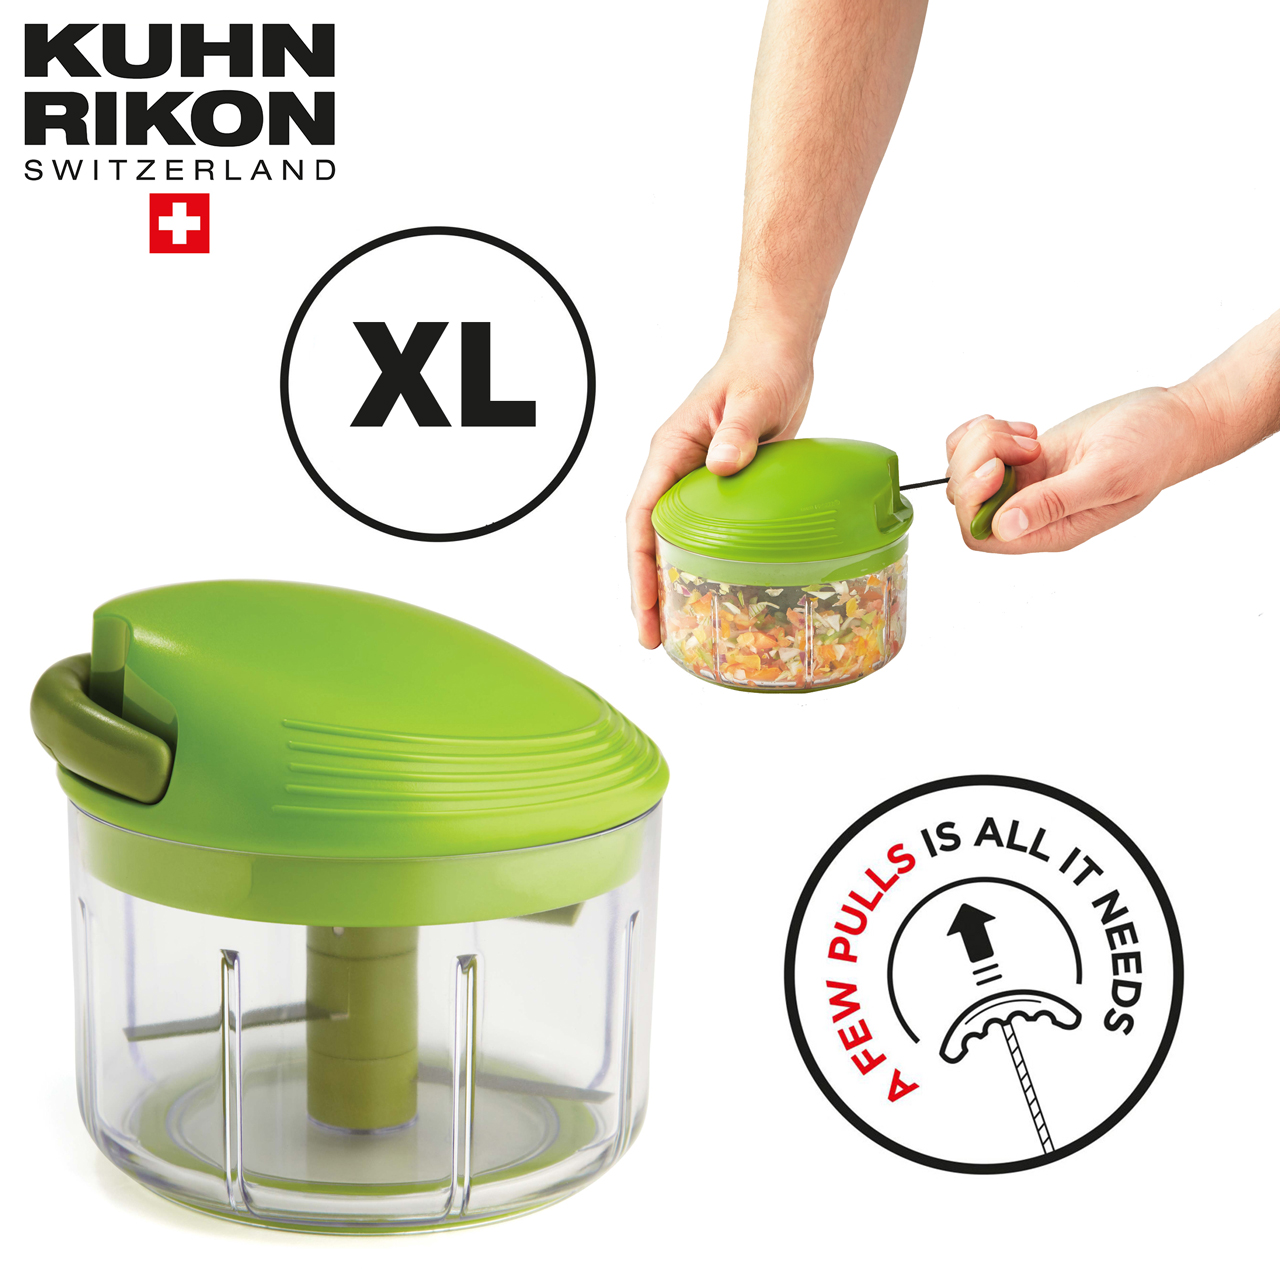 Kuhn-Rikon-Pull-Chop-Universalhacker-XL-Swiss-27412-ohne-strom-kaufen-lafueliki